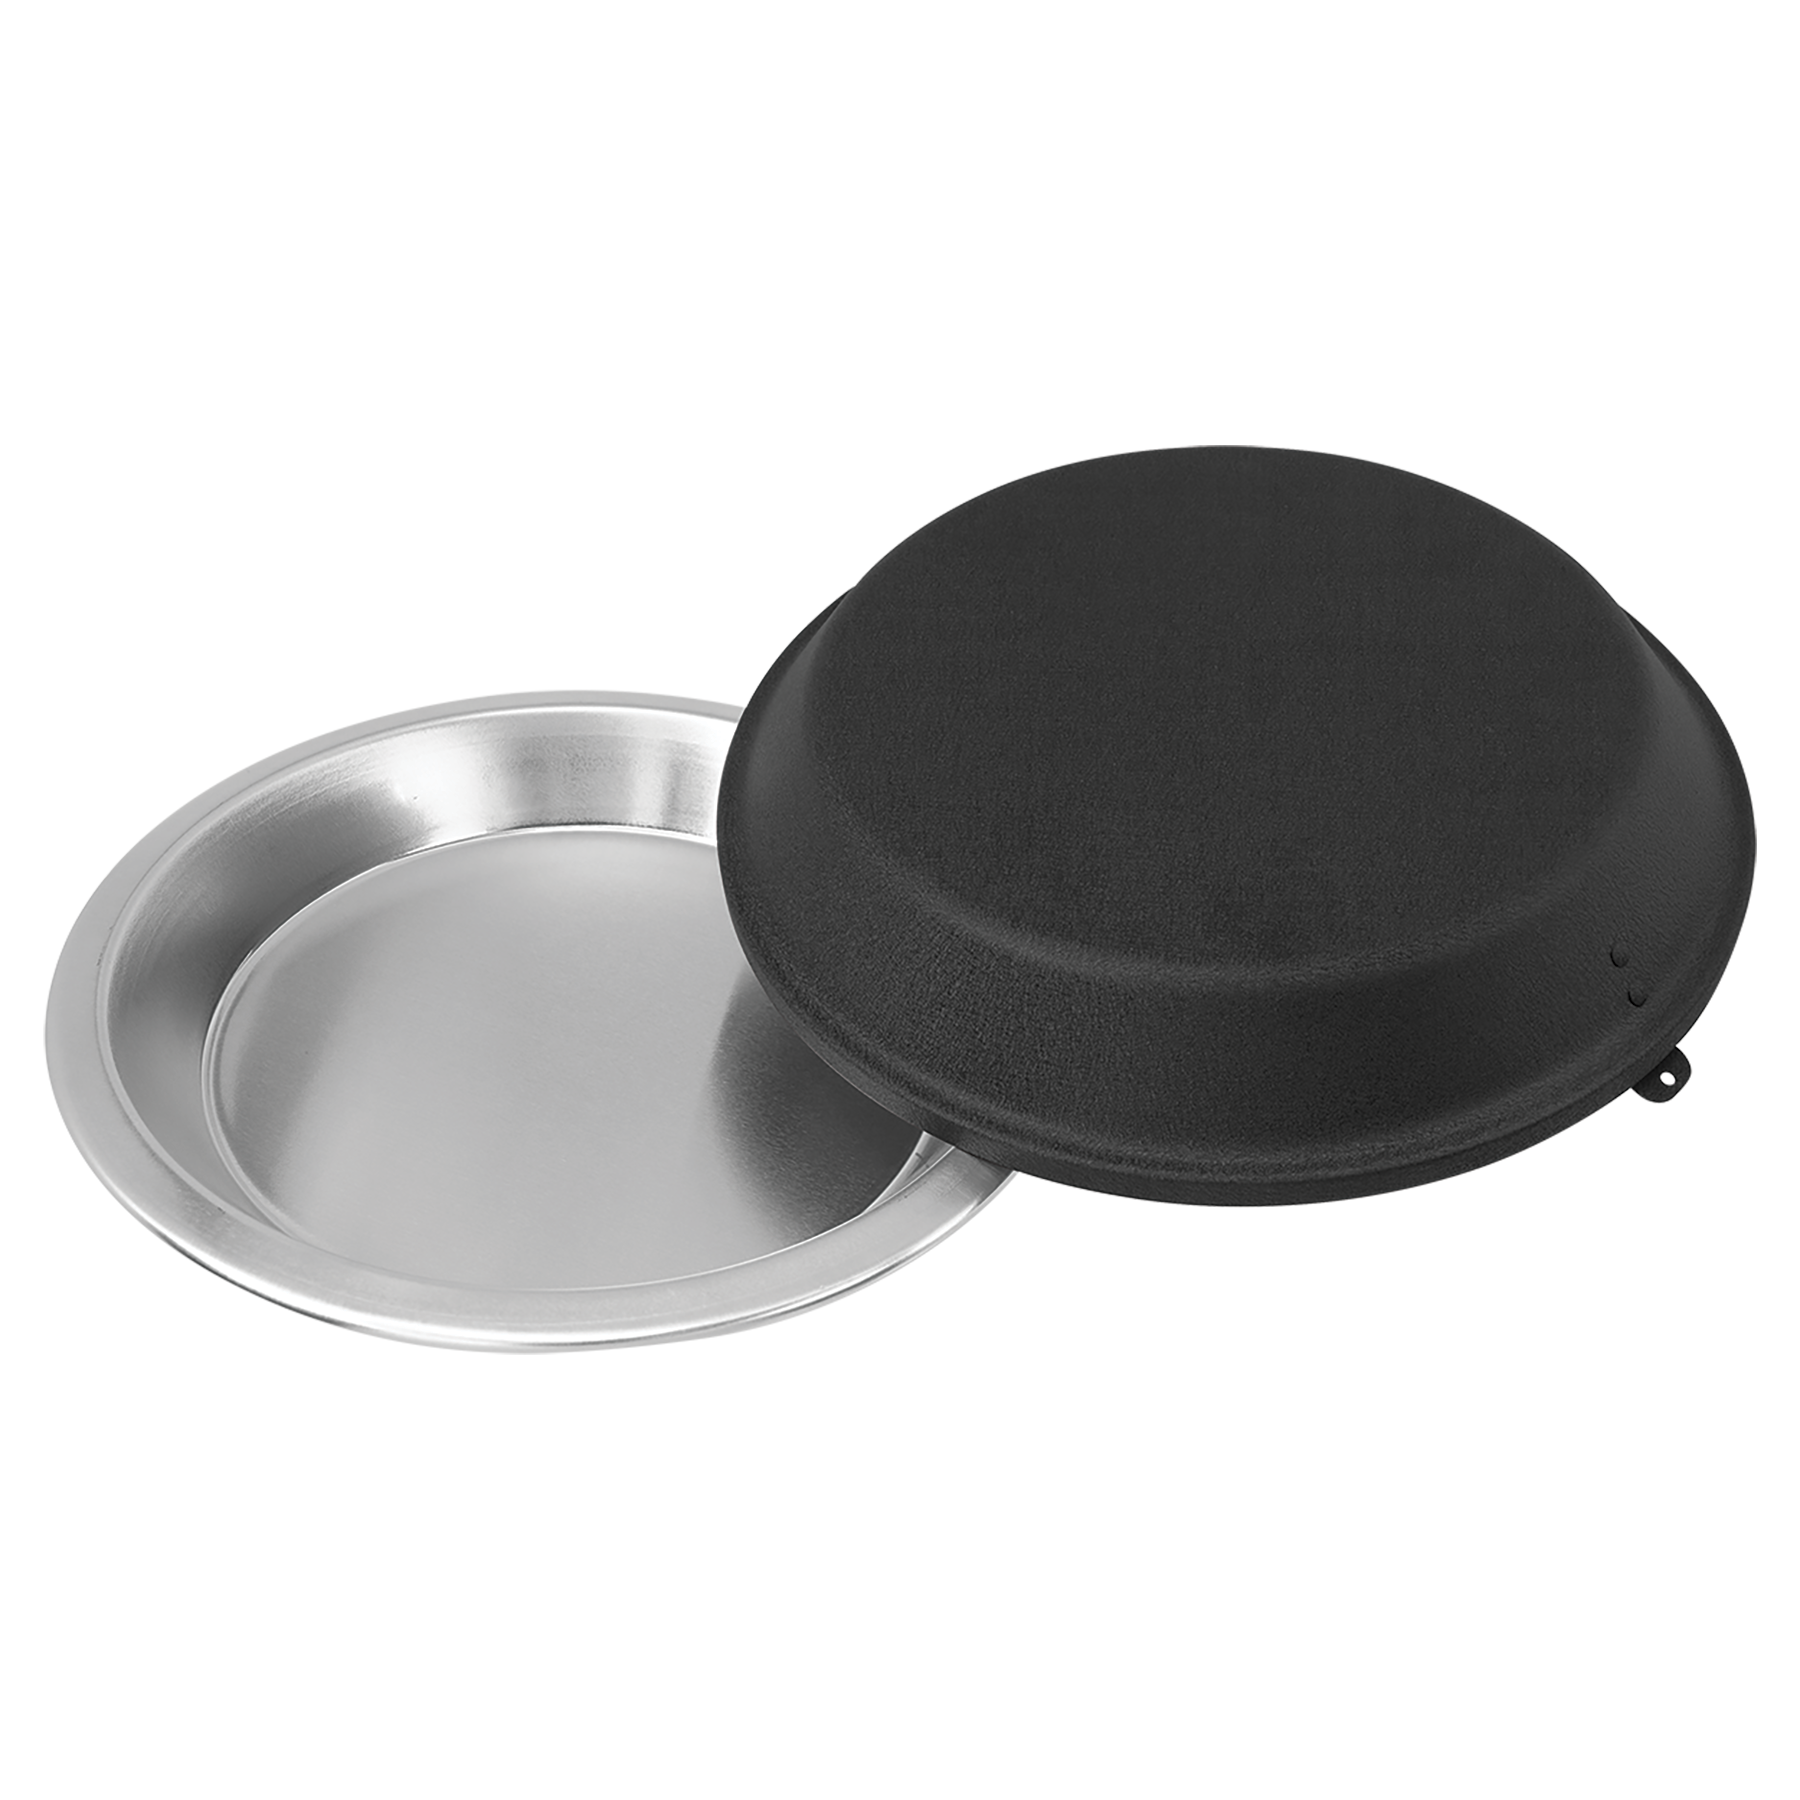 9" Aluminum Pie Pan with Black Lid